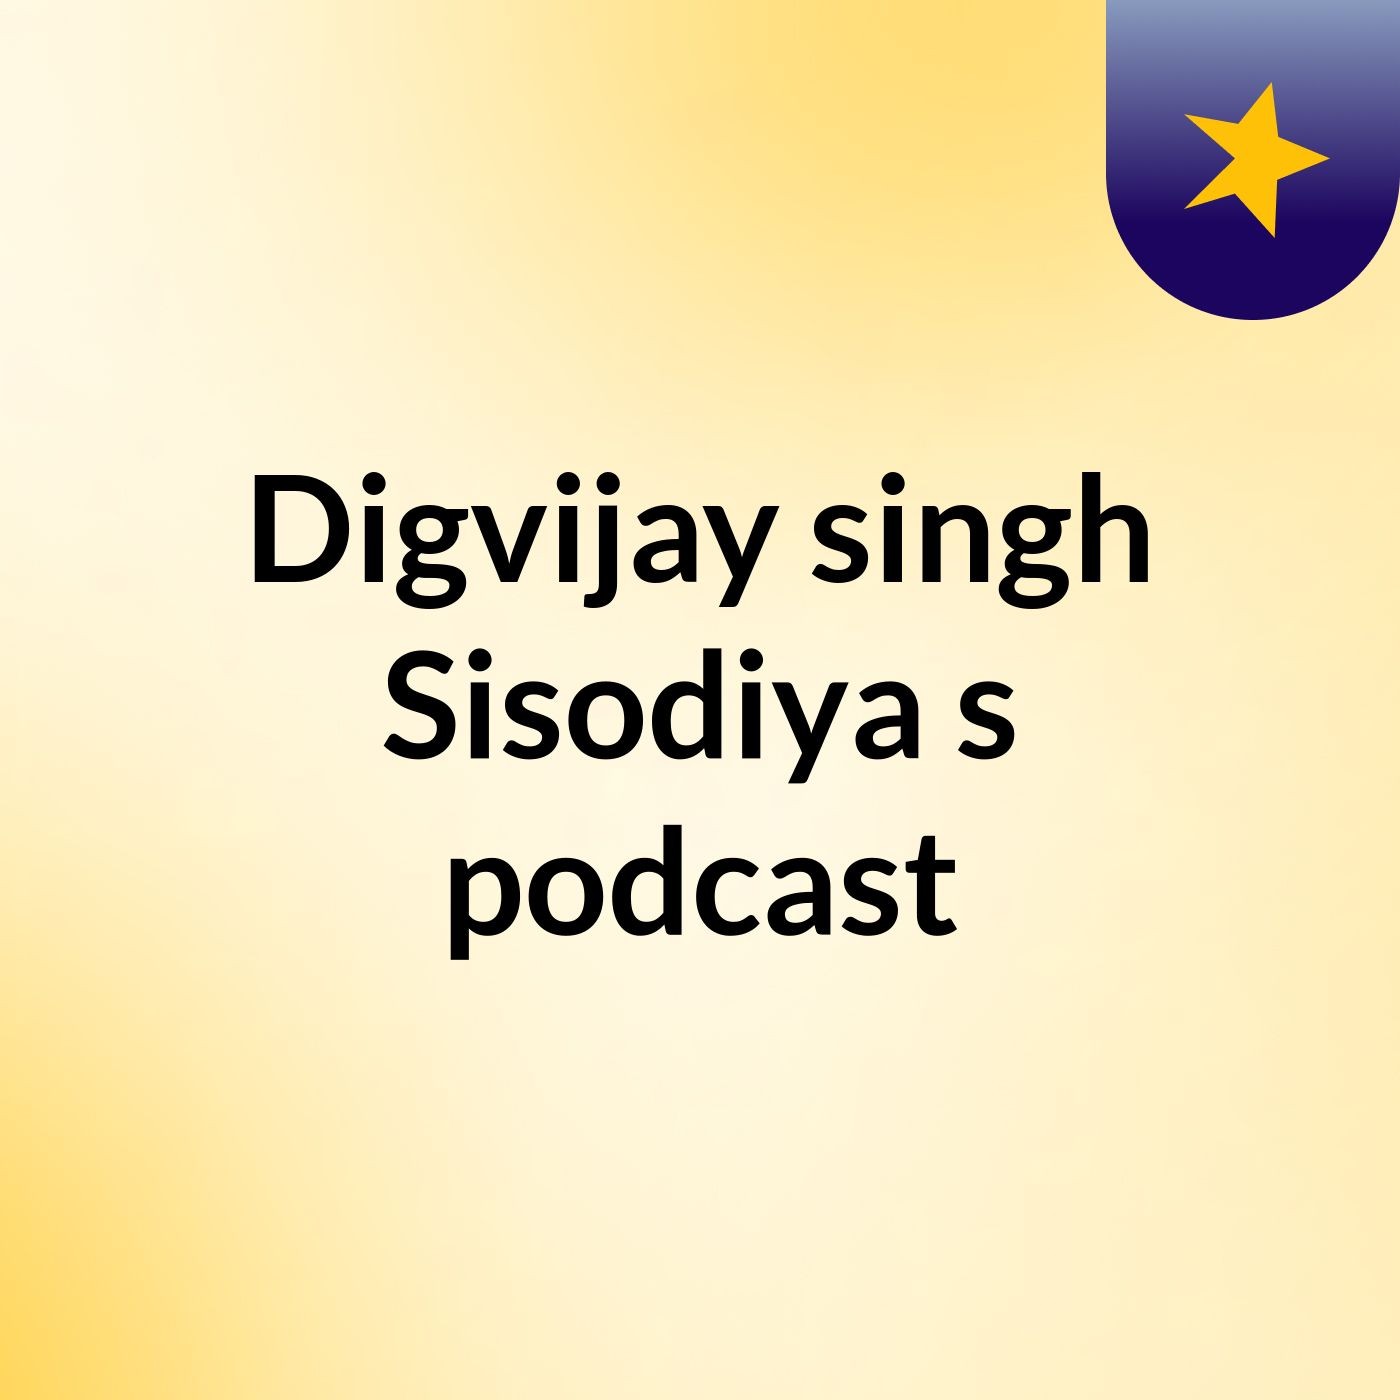 Episode 2 - Digvijay singh Sisodiya's podcast